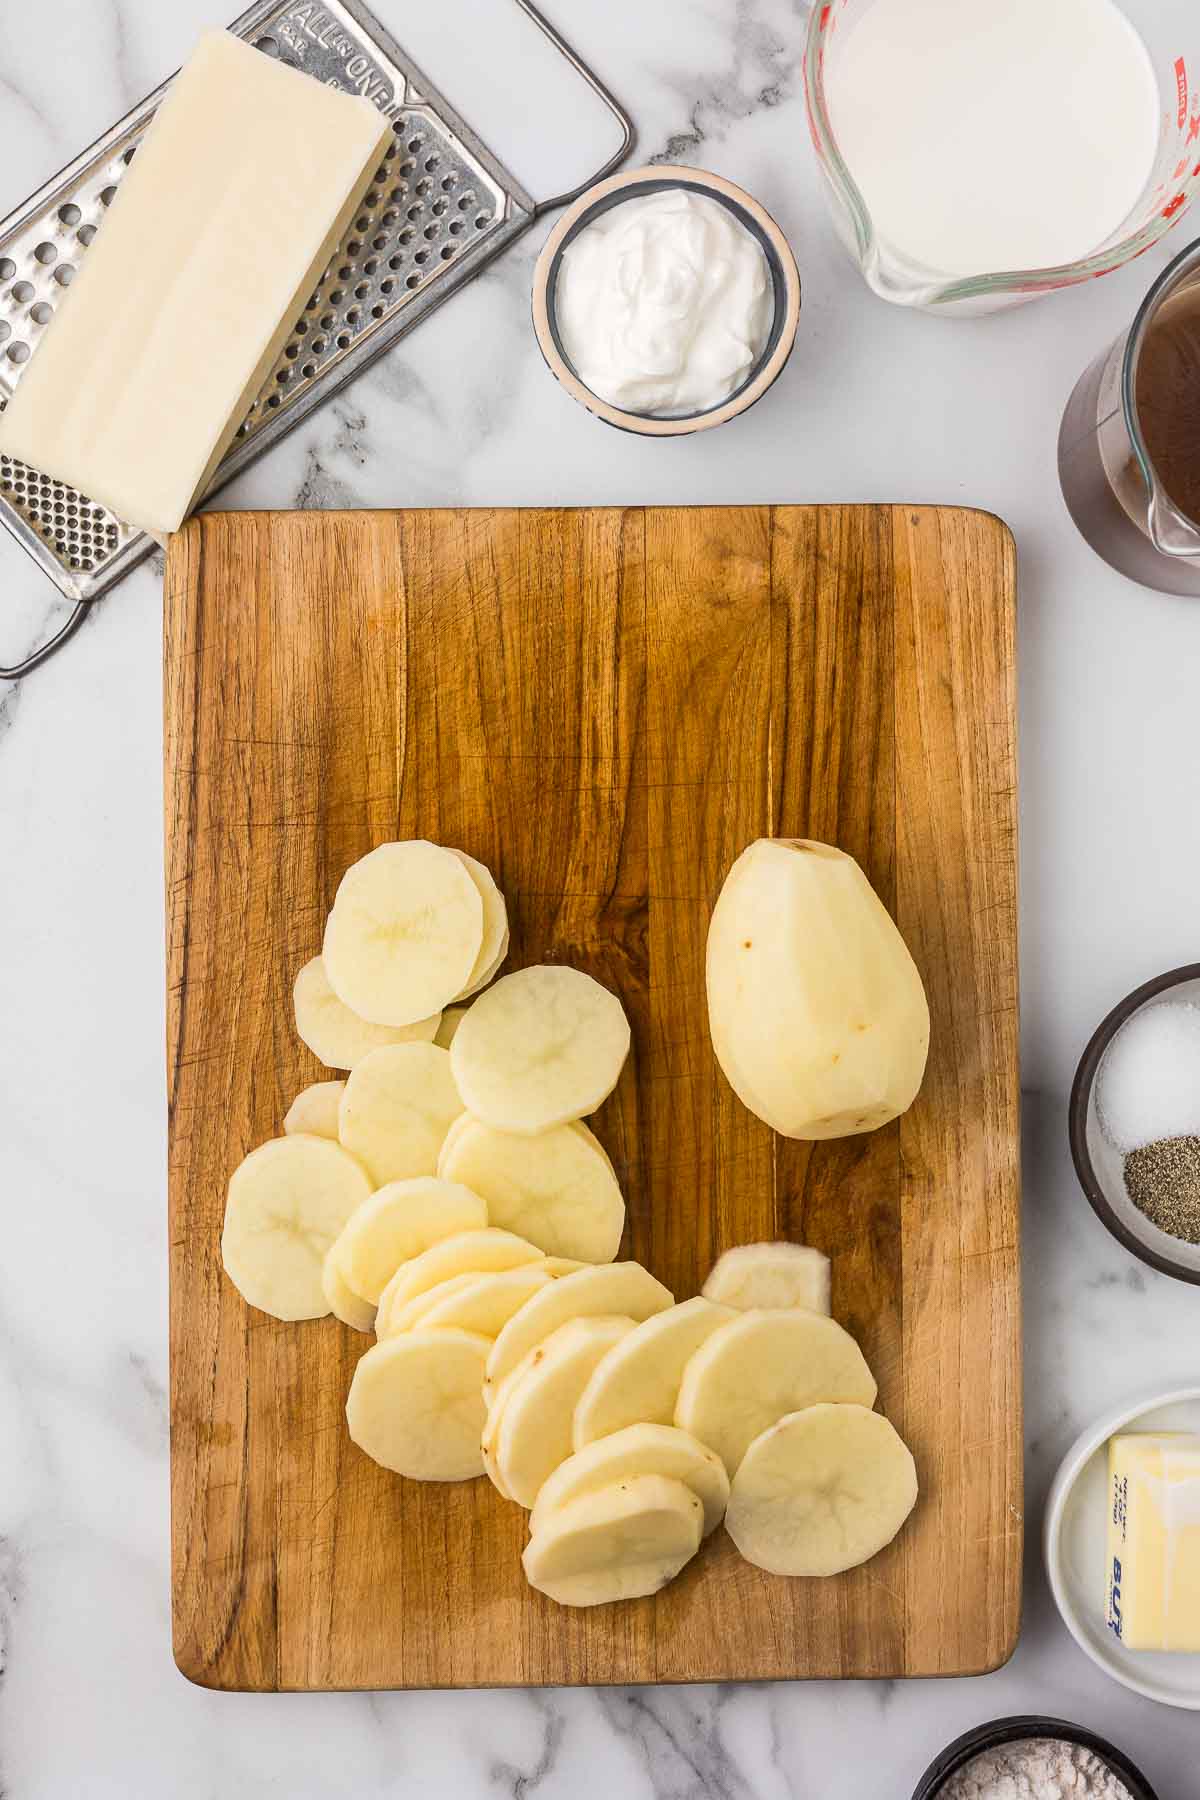 Potatoes sliced on a cutting board.